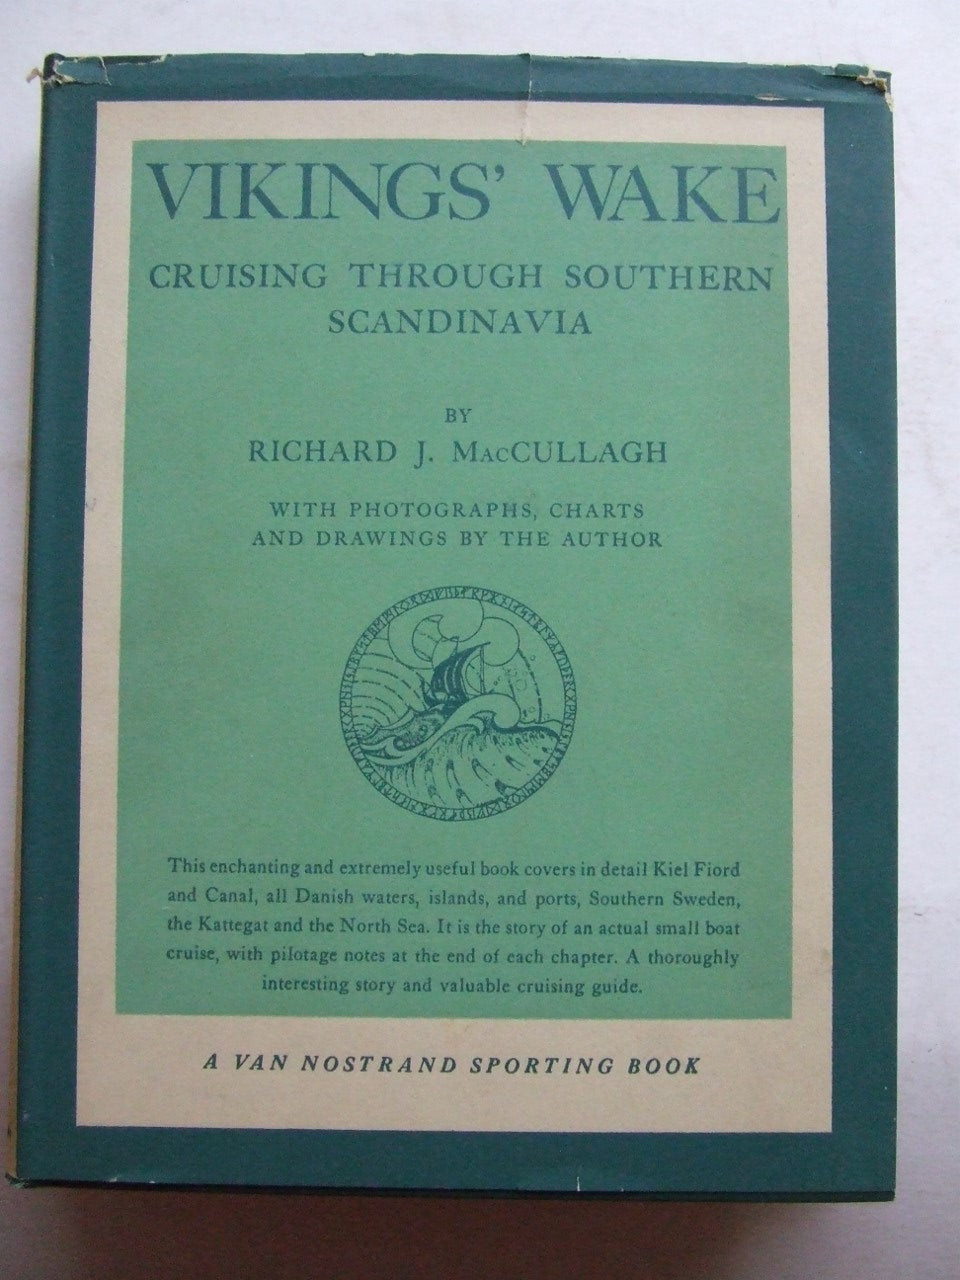 Viking's Wake, cruising through southern Scandinavian waters